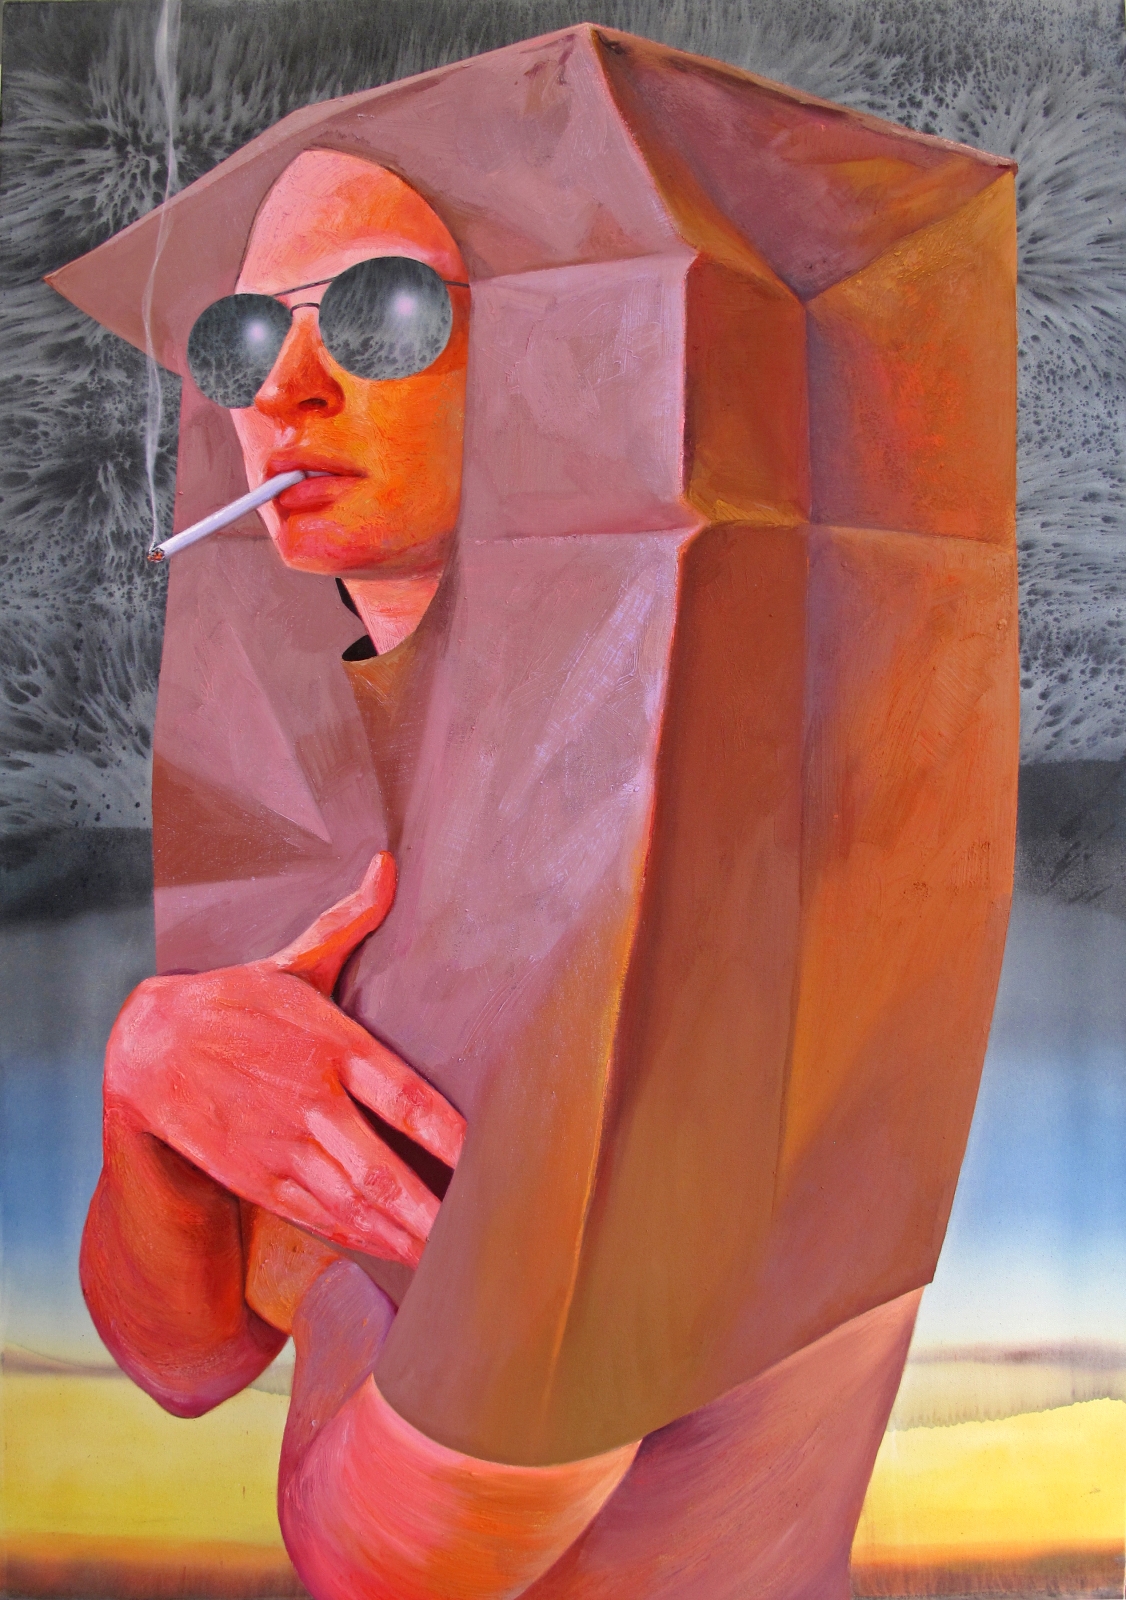 Robin F. Williams
Bag Lady, 2016
acrylic and oil on canvas
58 x 40 ins.
147.3 x 101.6 cm